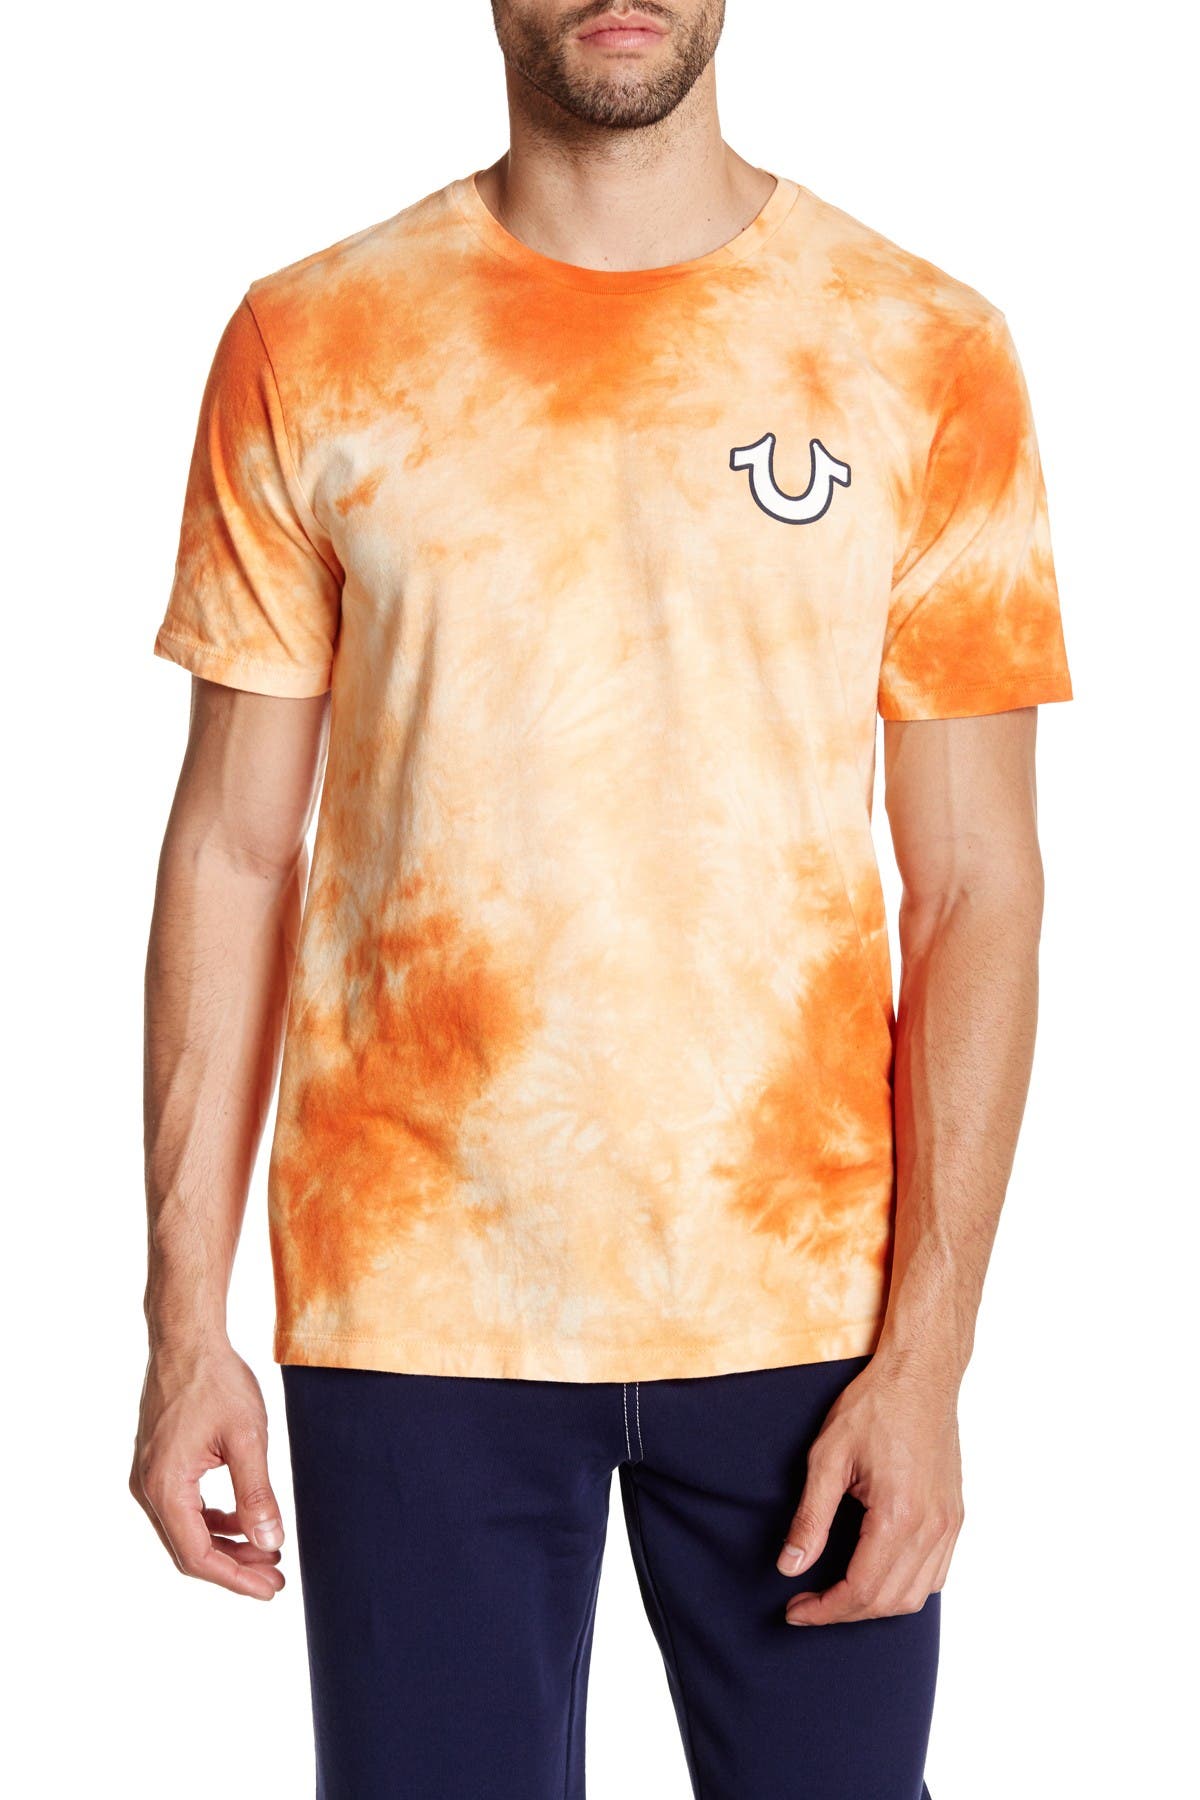 true religion orange shirt